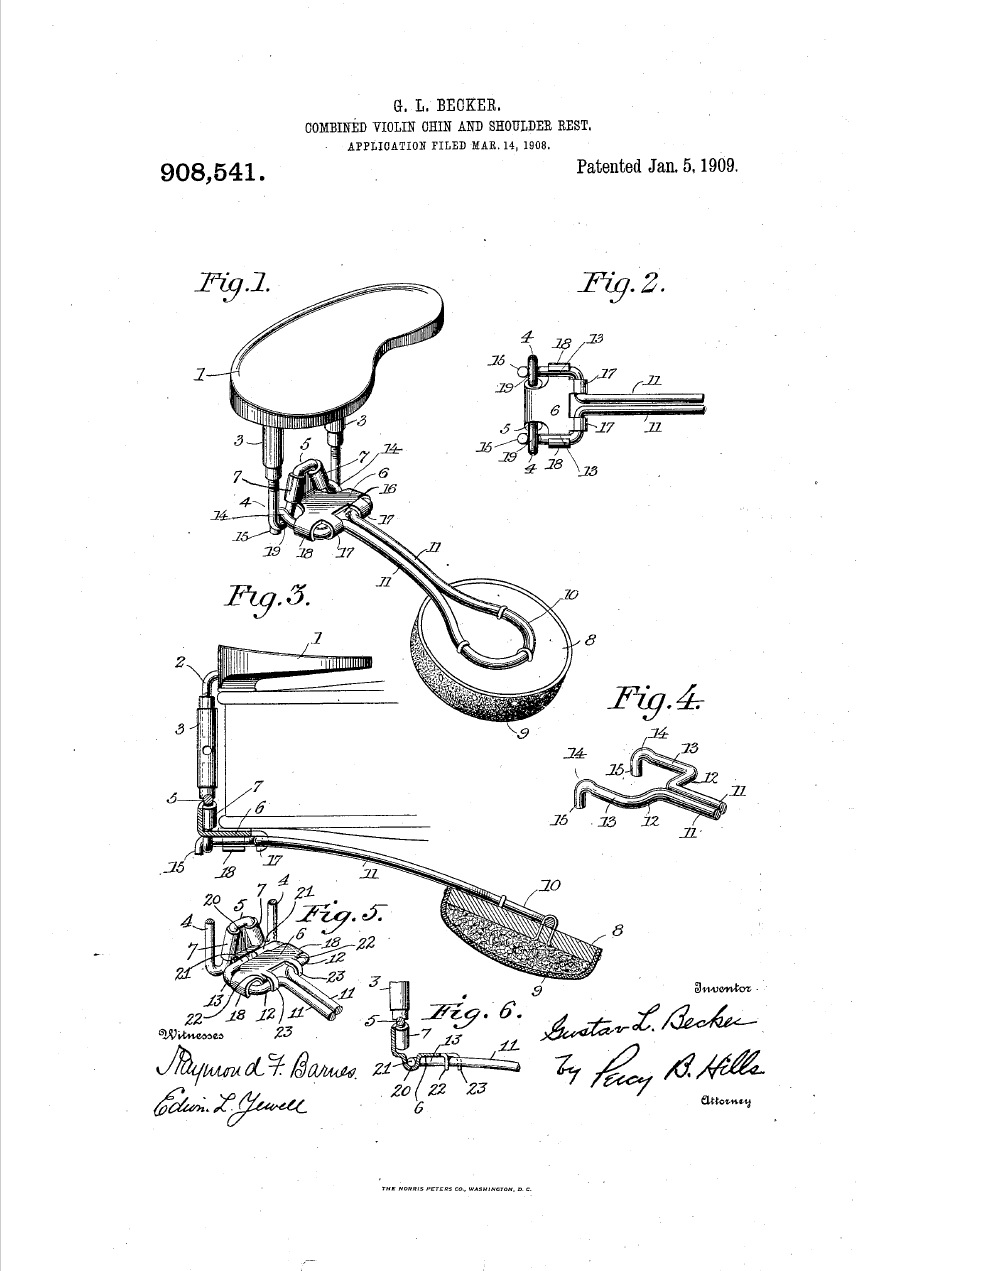 Violin Shoulder Rest - combined chin and shoulder rest patent by G. Becker